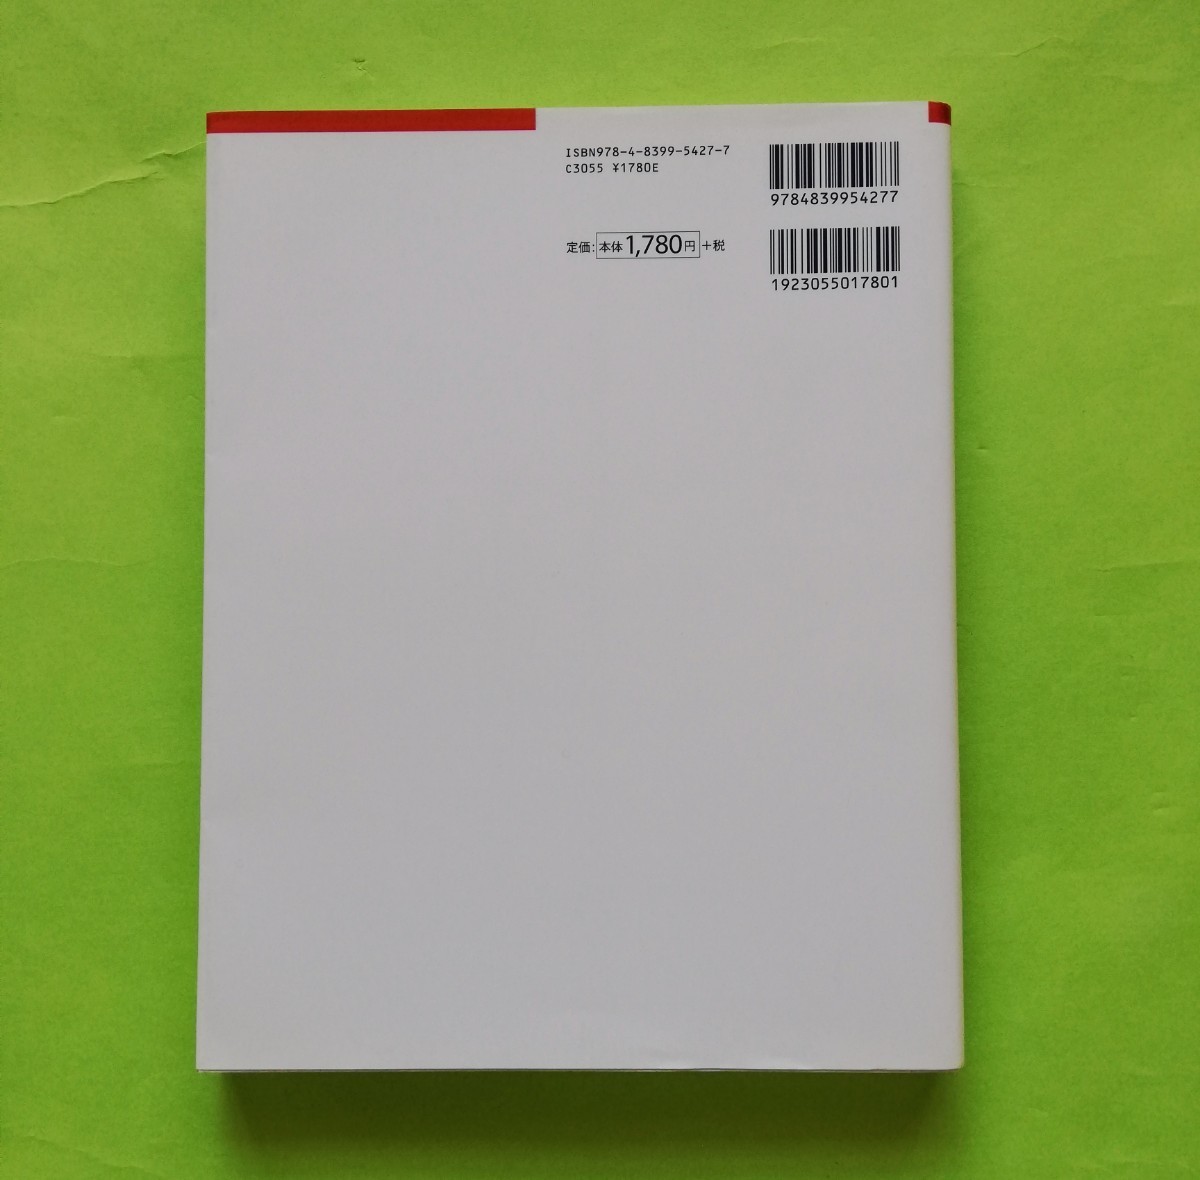 a2.. iMac master book OS X Yosemite correspondence version | Matsuyama .| arrow ..( work )